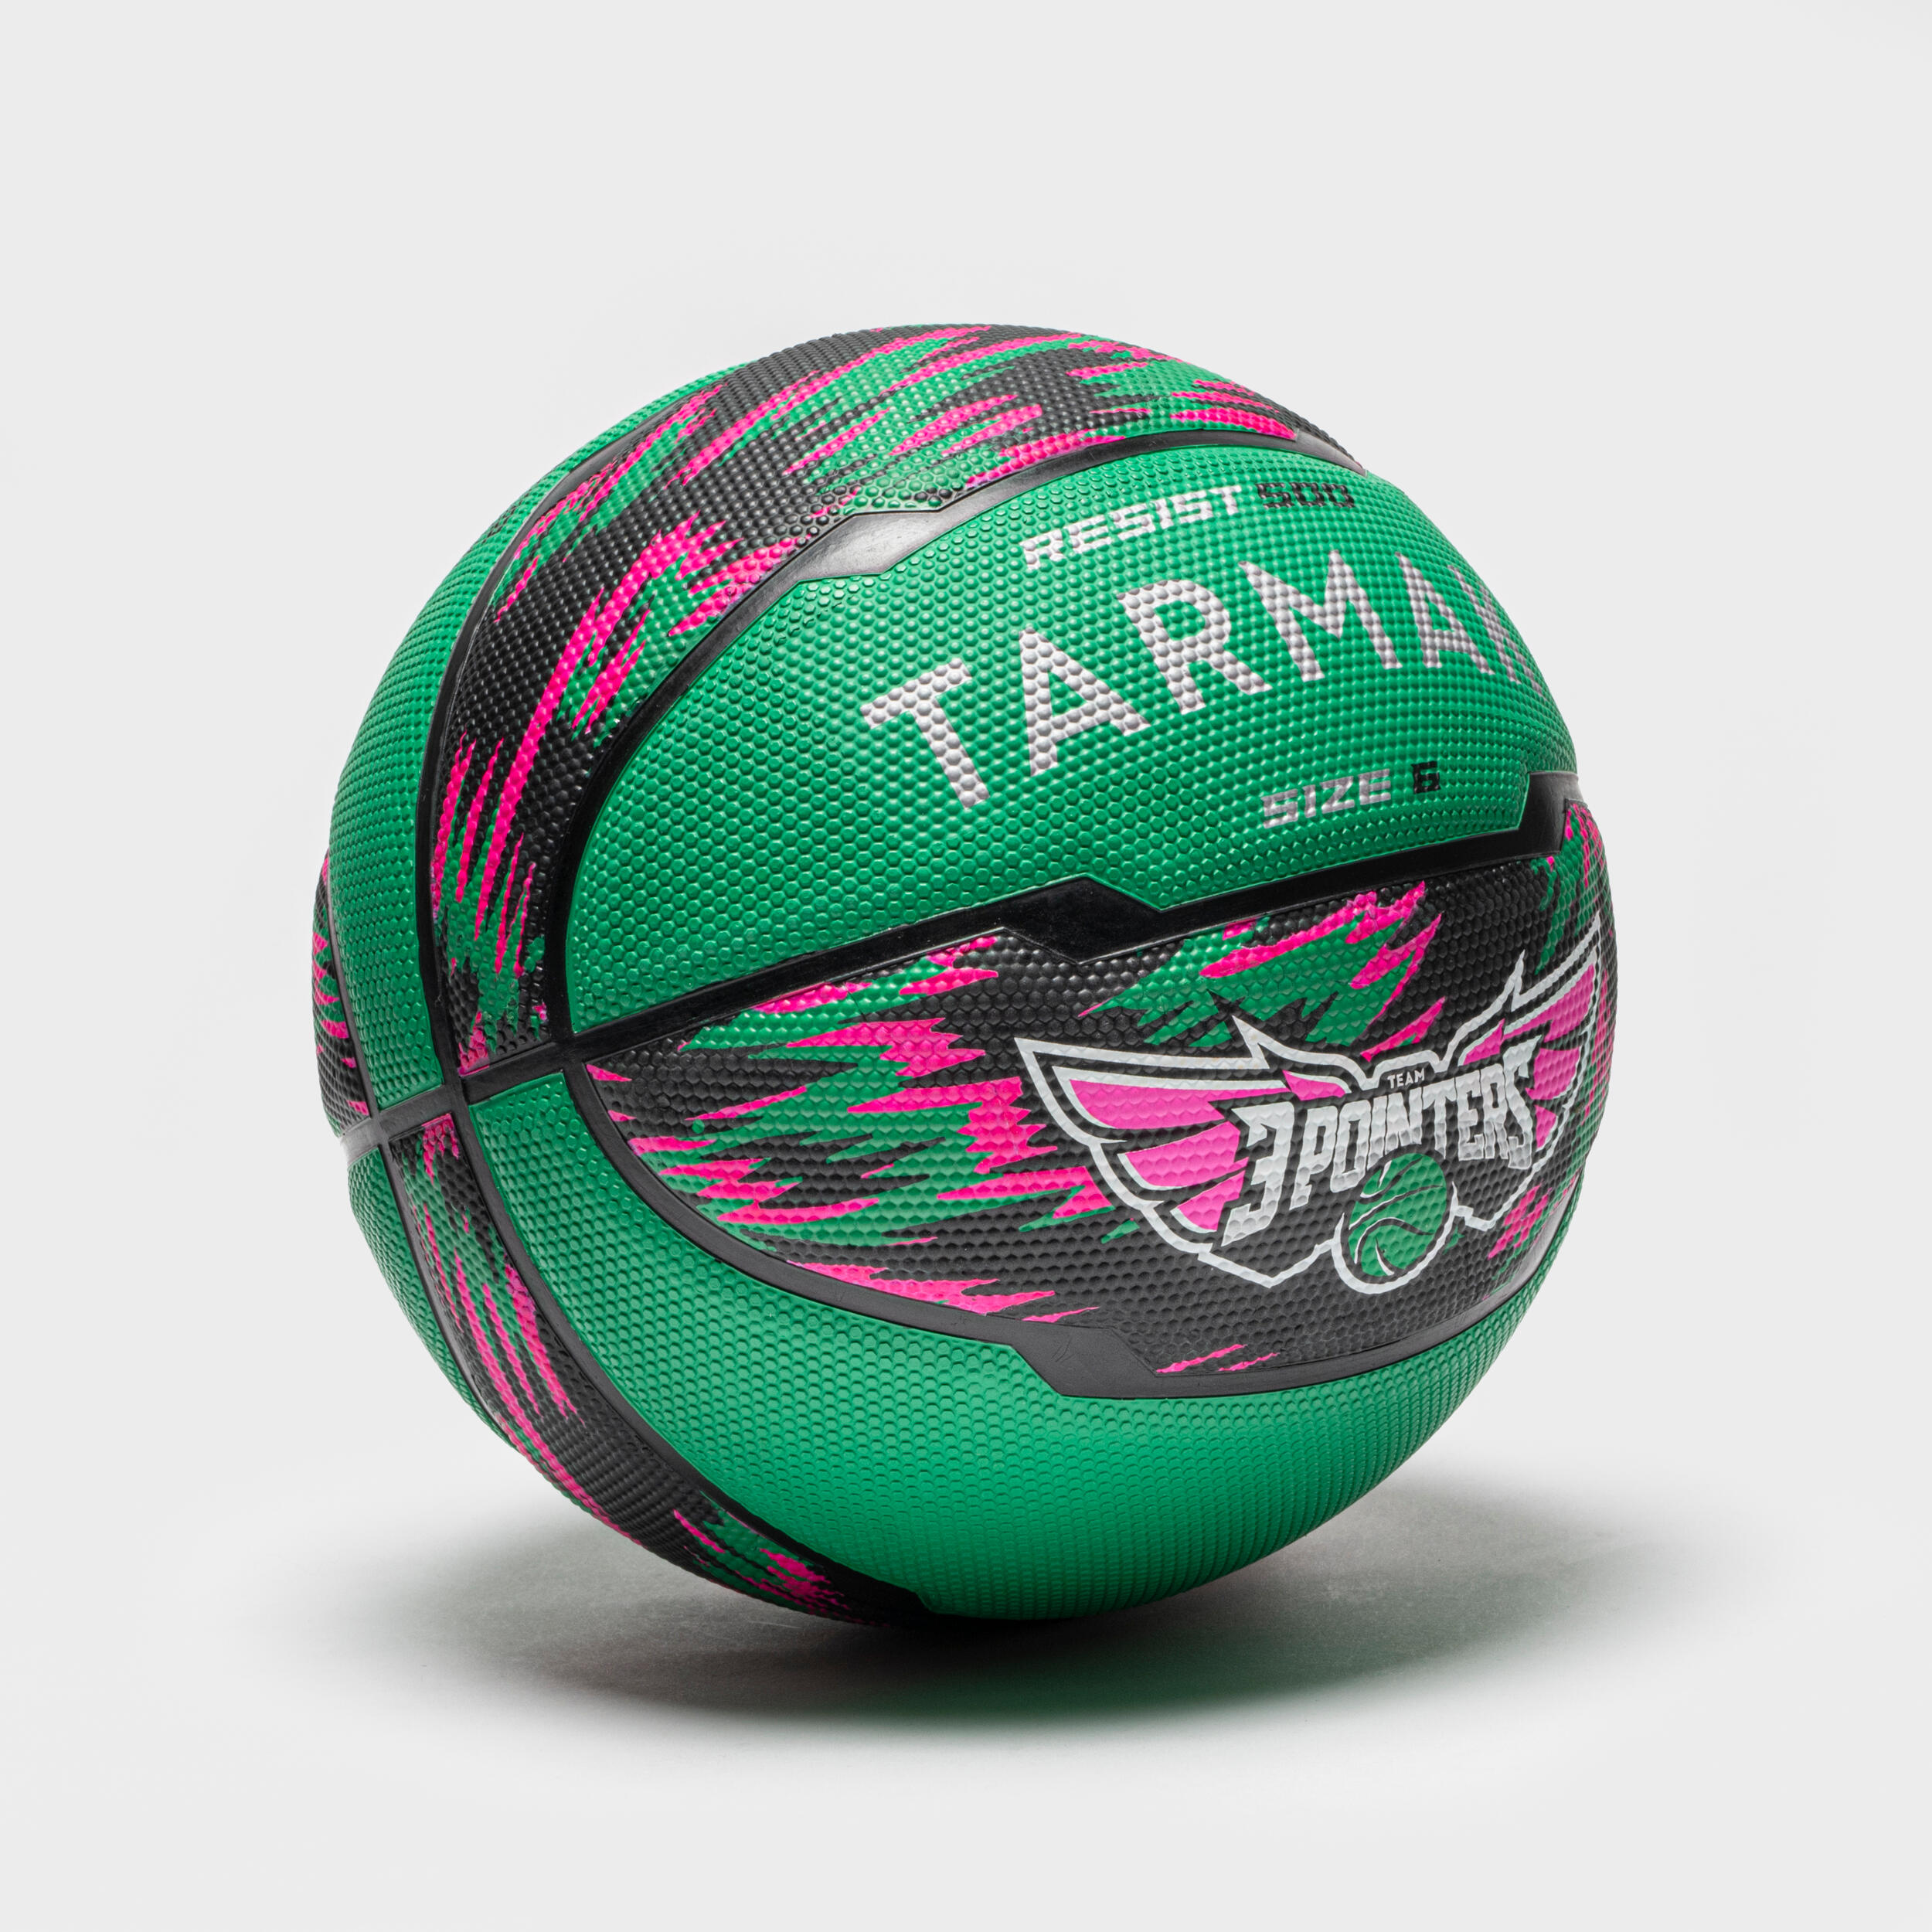 Basketball Ball Size 6 Grip Indoor Outdoor R500 Green Purple